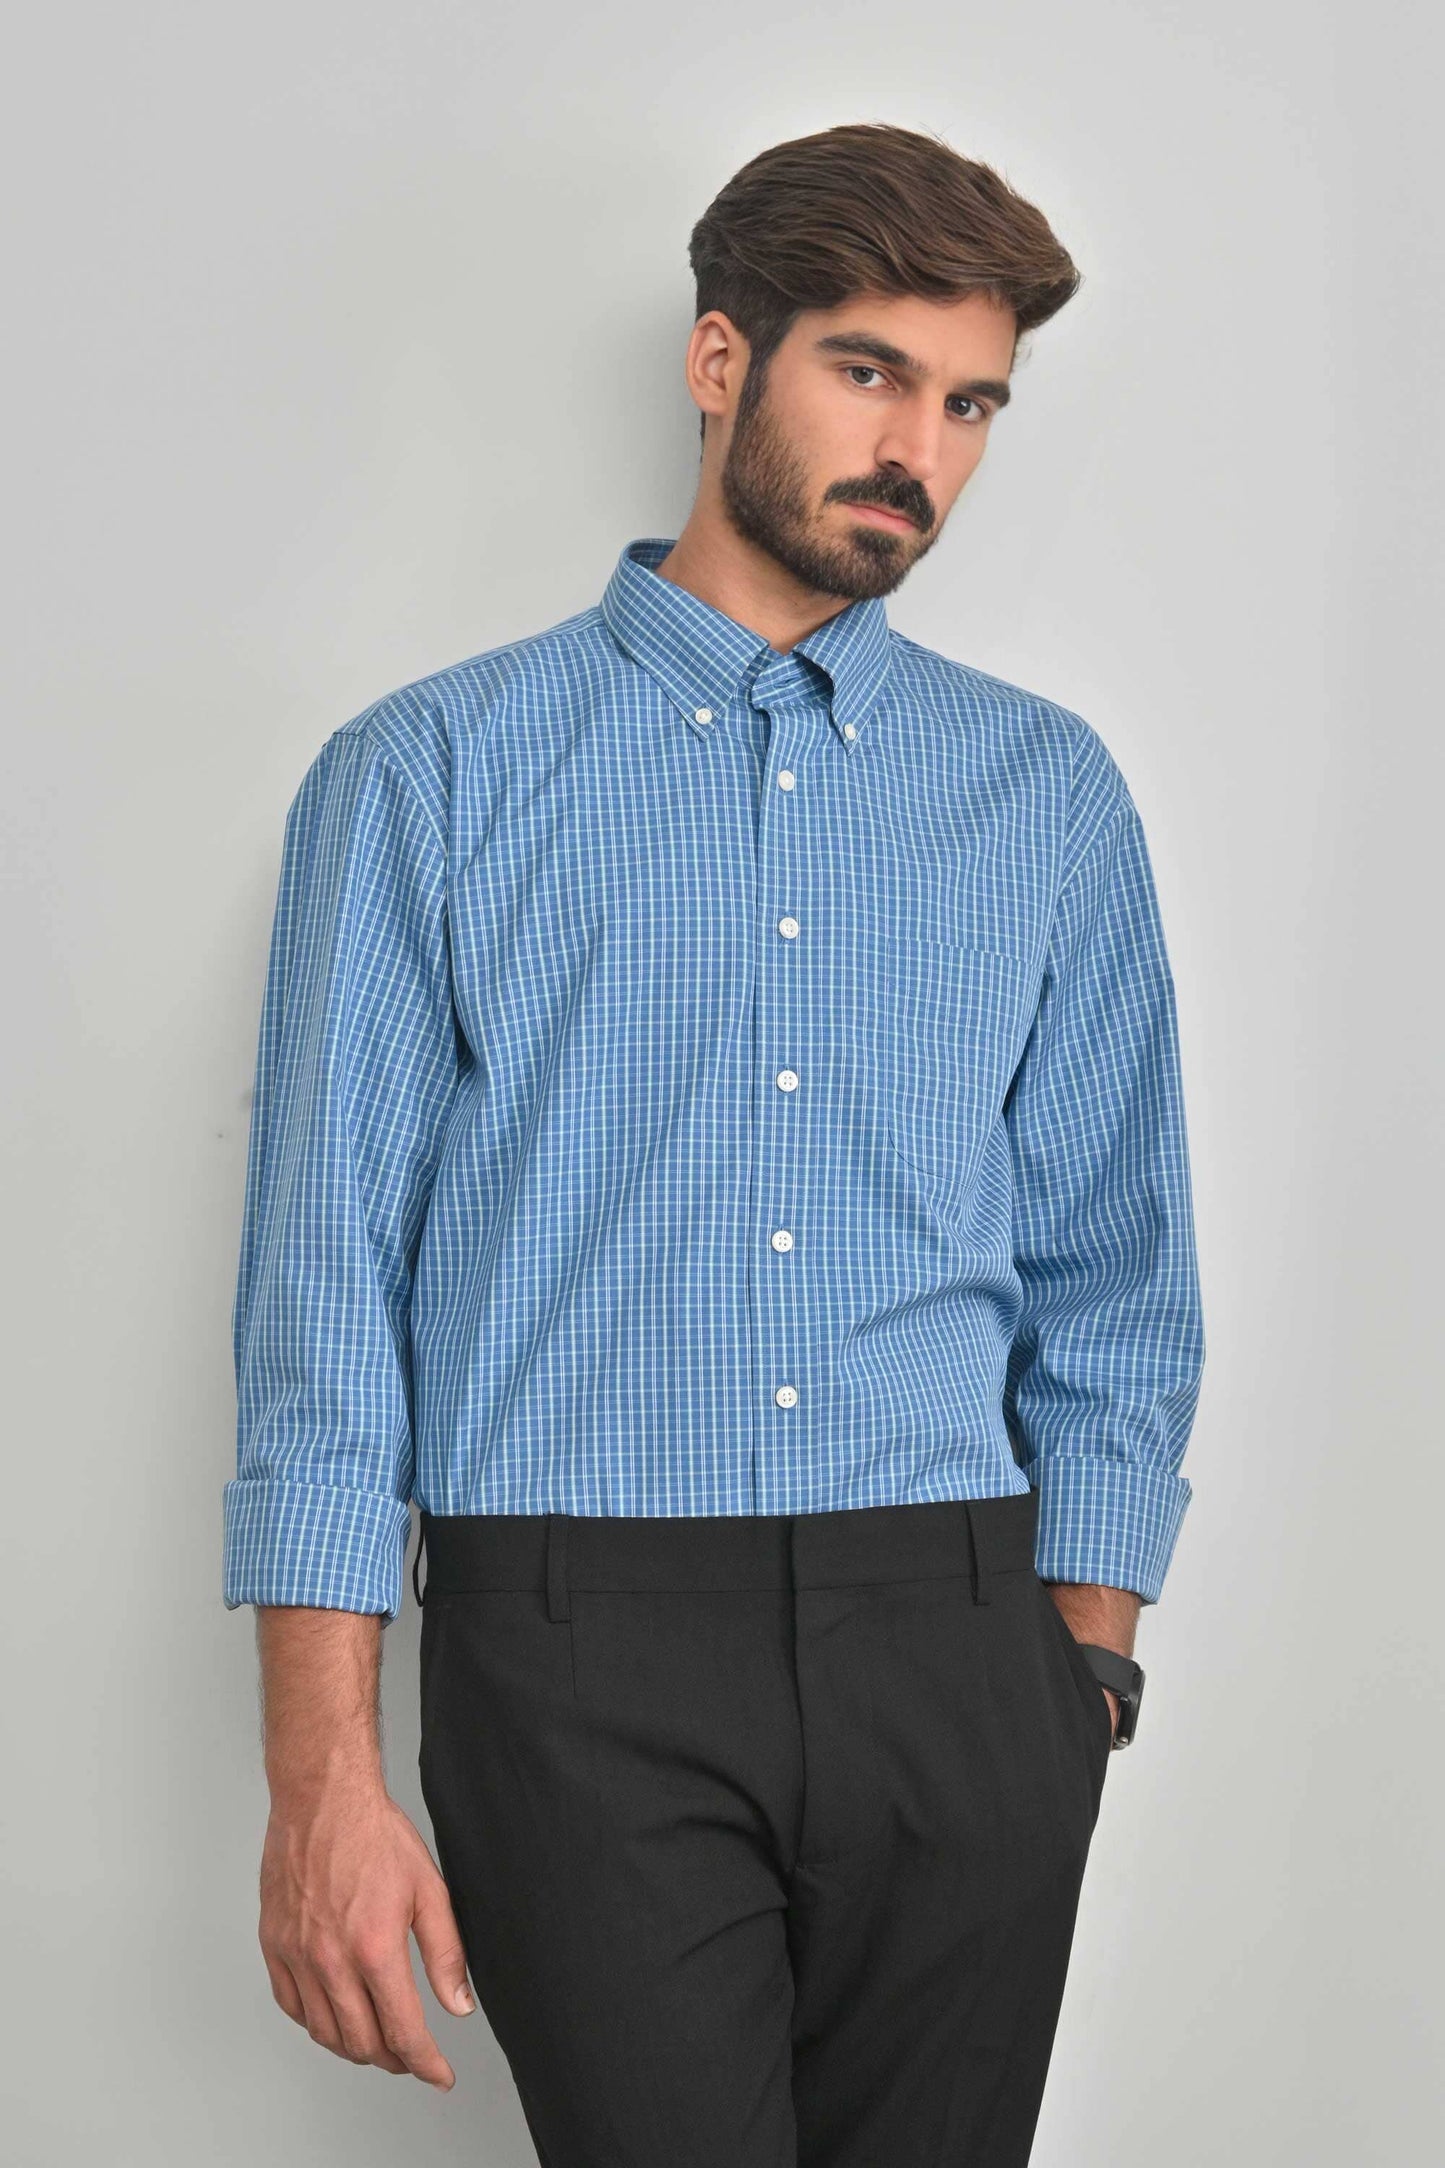 Cut Label Men's Traun Design Formal Shirt